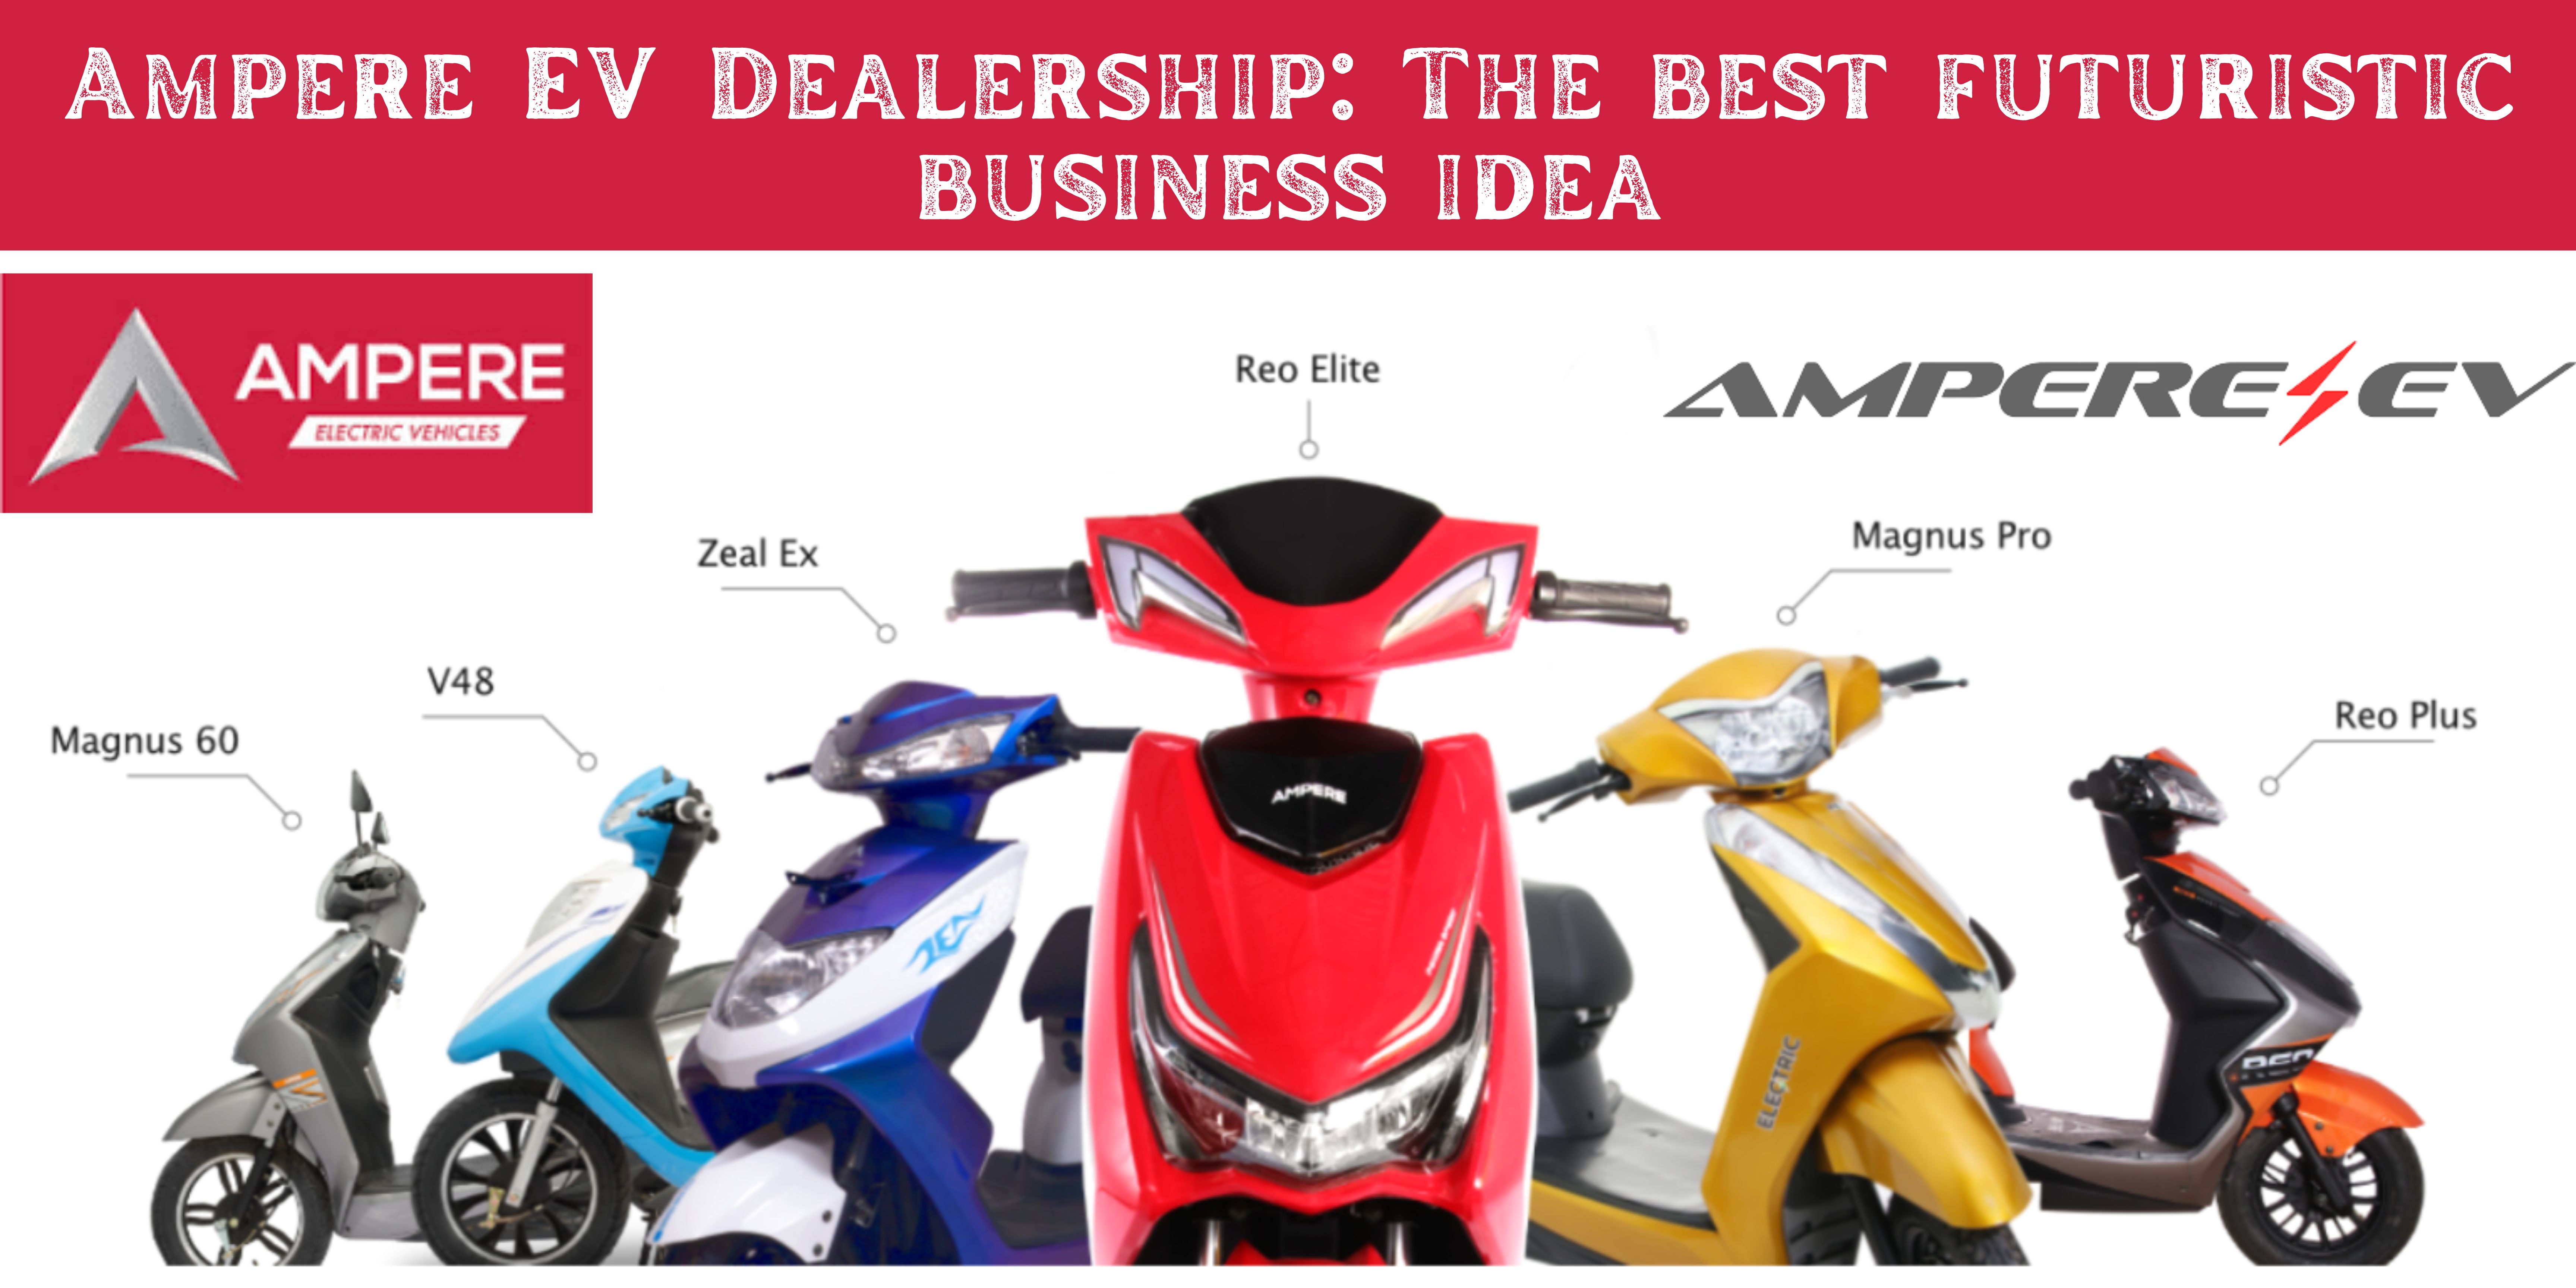 Ampere EV Dealership: The Best Futuristic Business Idea